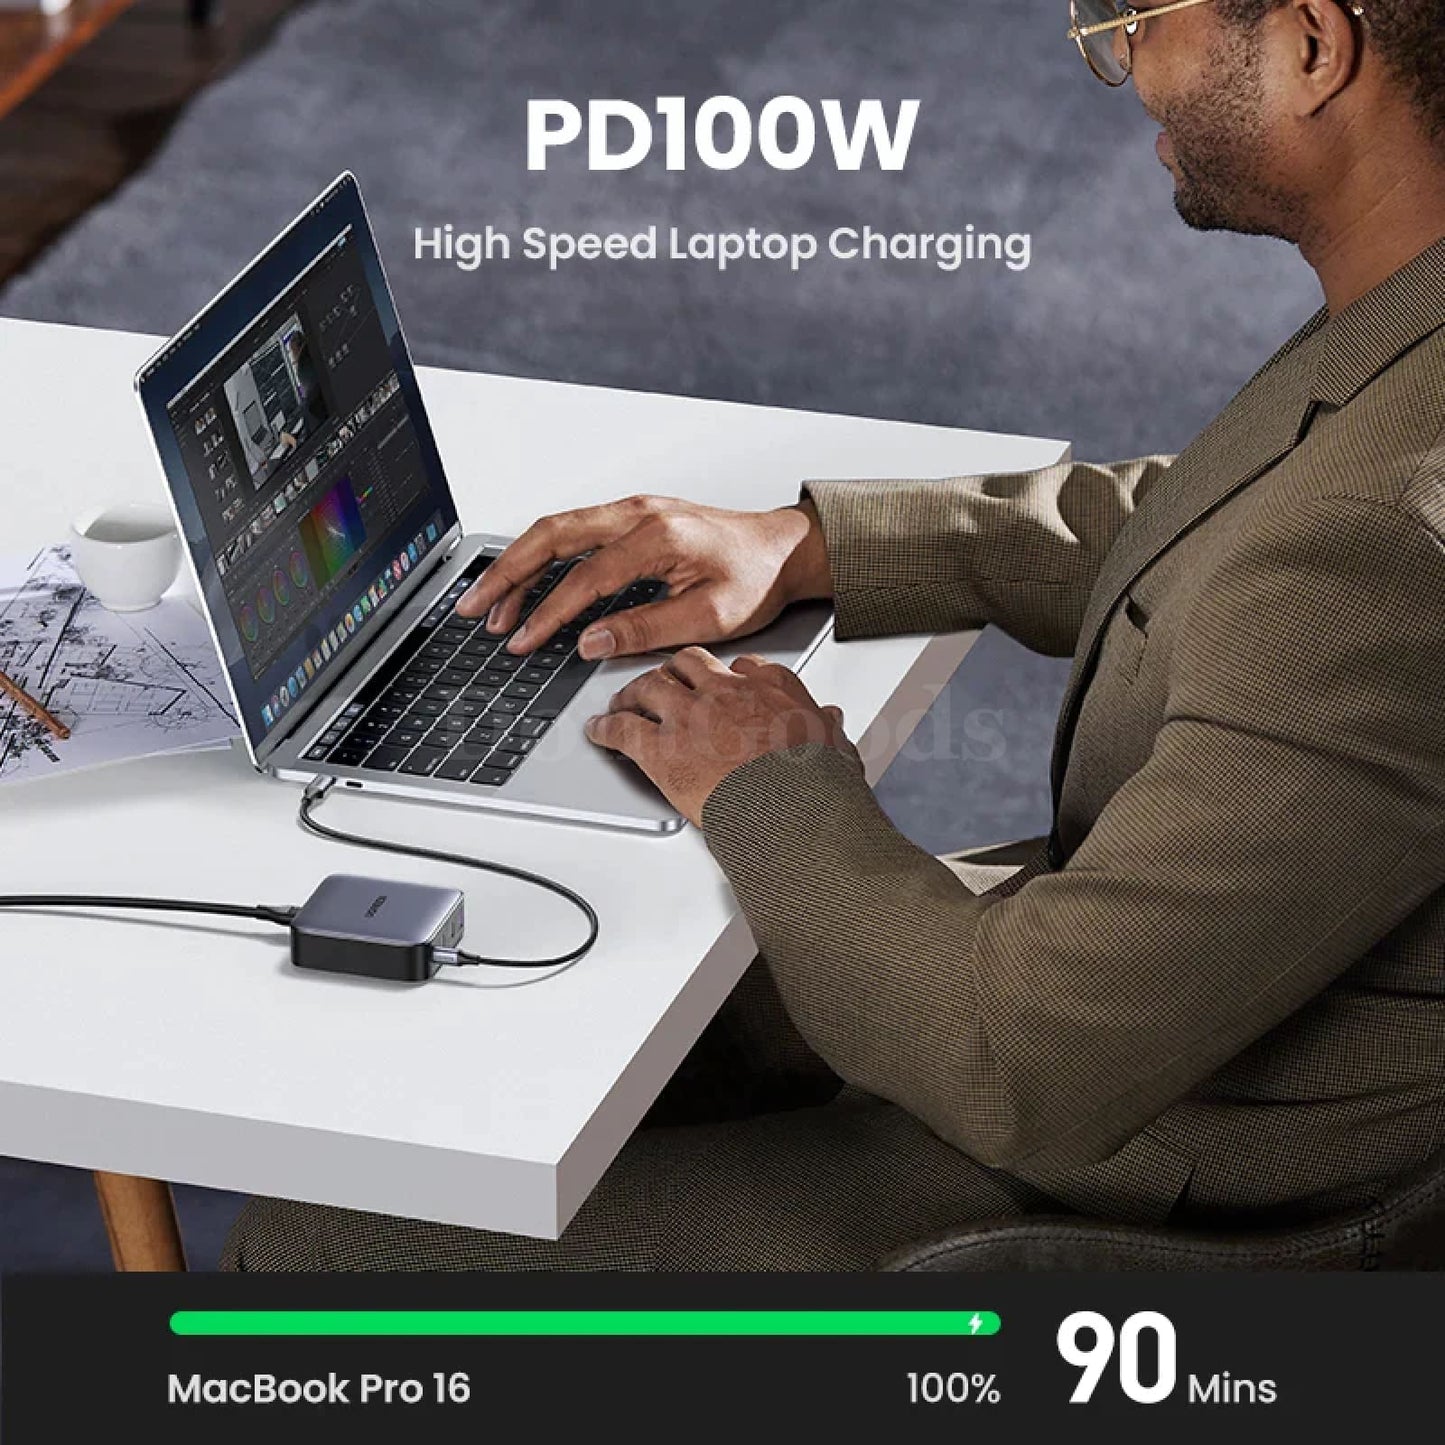 Ugreen 100W Gan Charger 4-In-1 Desktop Laptop Fast Adapter Iphone Pro Max Xiaomi 301635